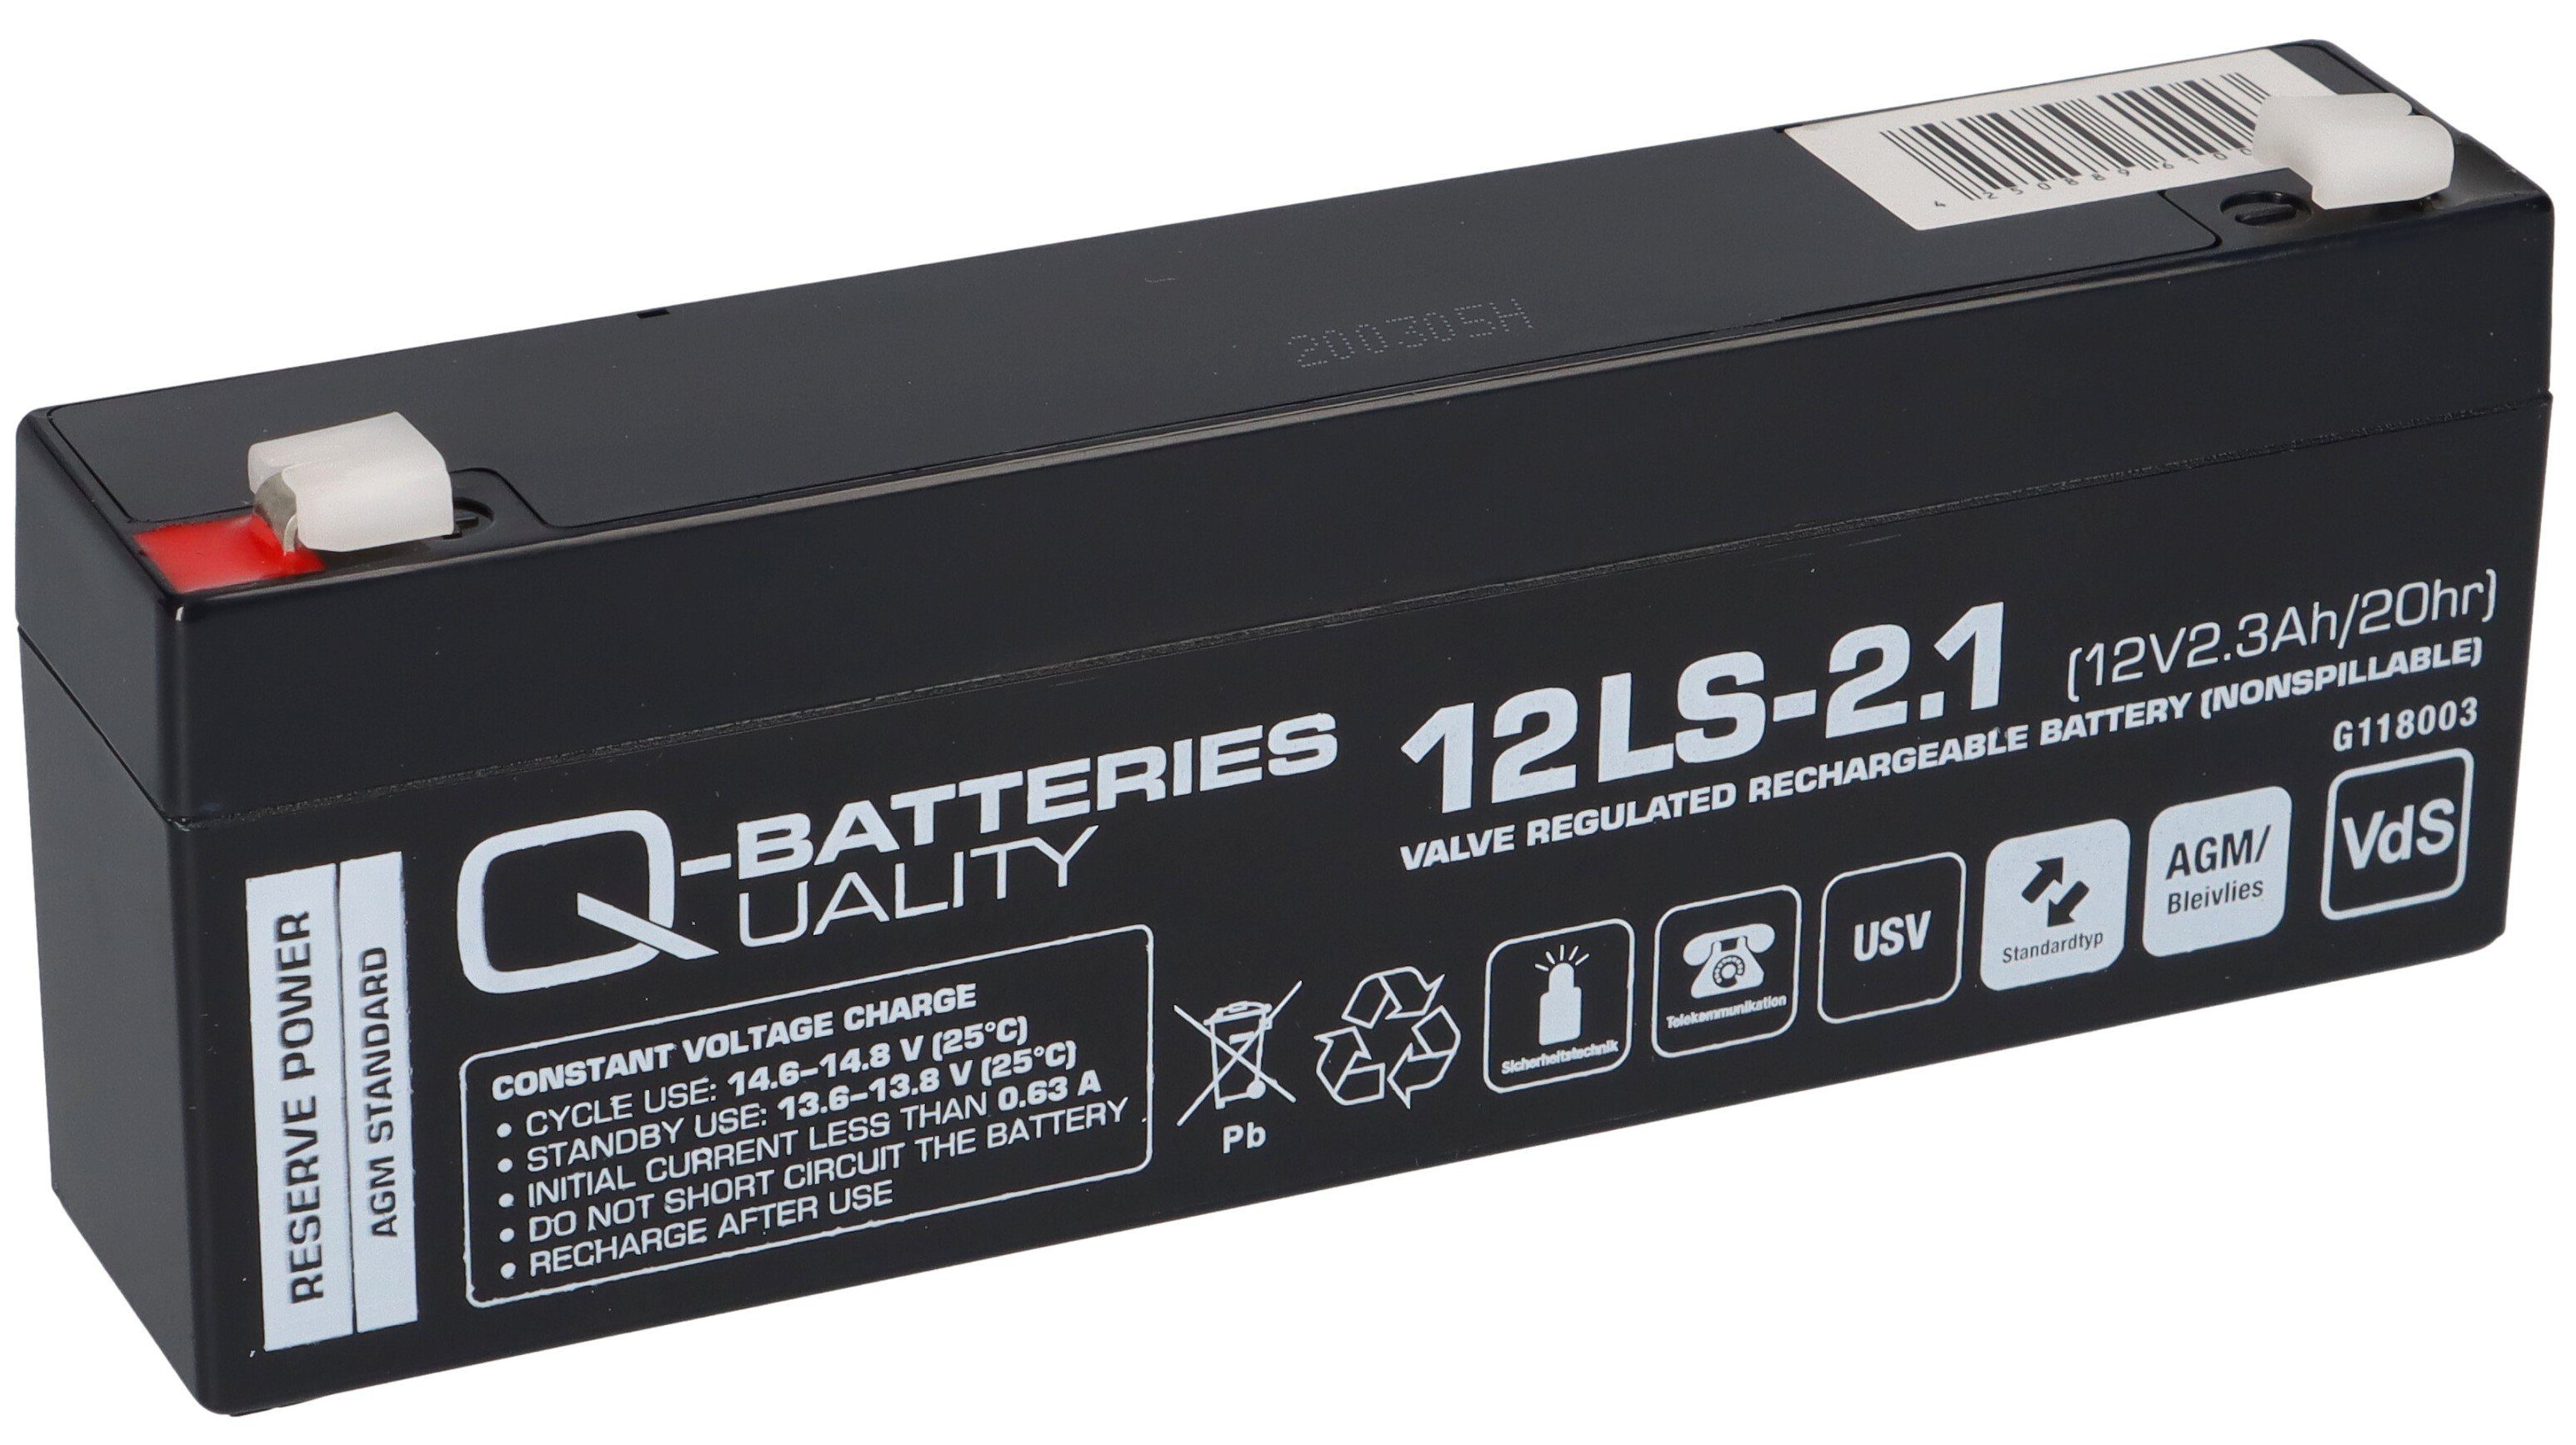 Q-Batteries Q-Batteries 12LS-2.1 12V 2,1Ah Blei-Vlies Akku / AGM VRLA VRLA mit VdS Bleiakkus